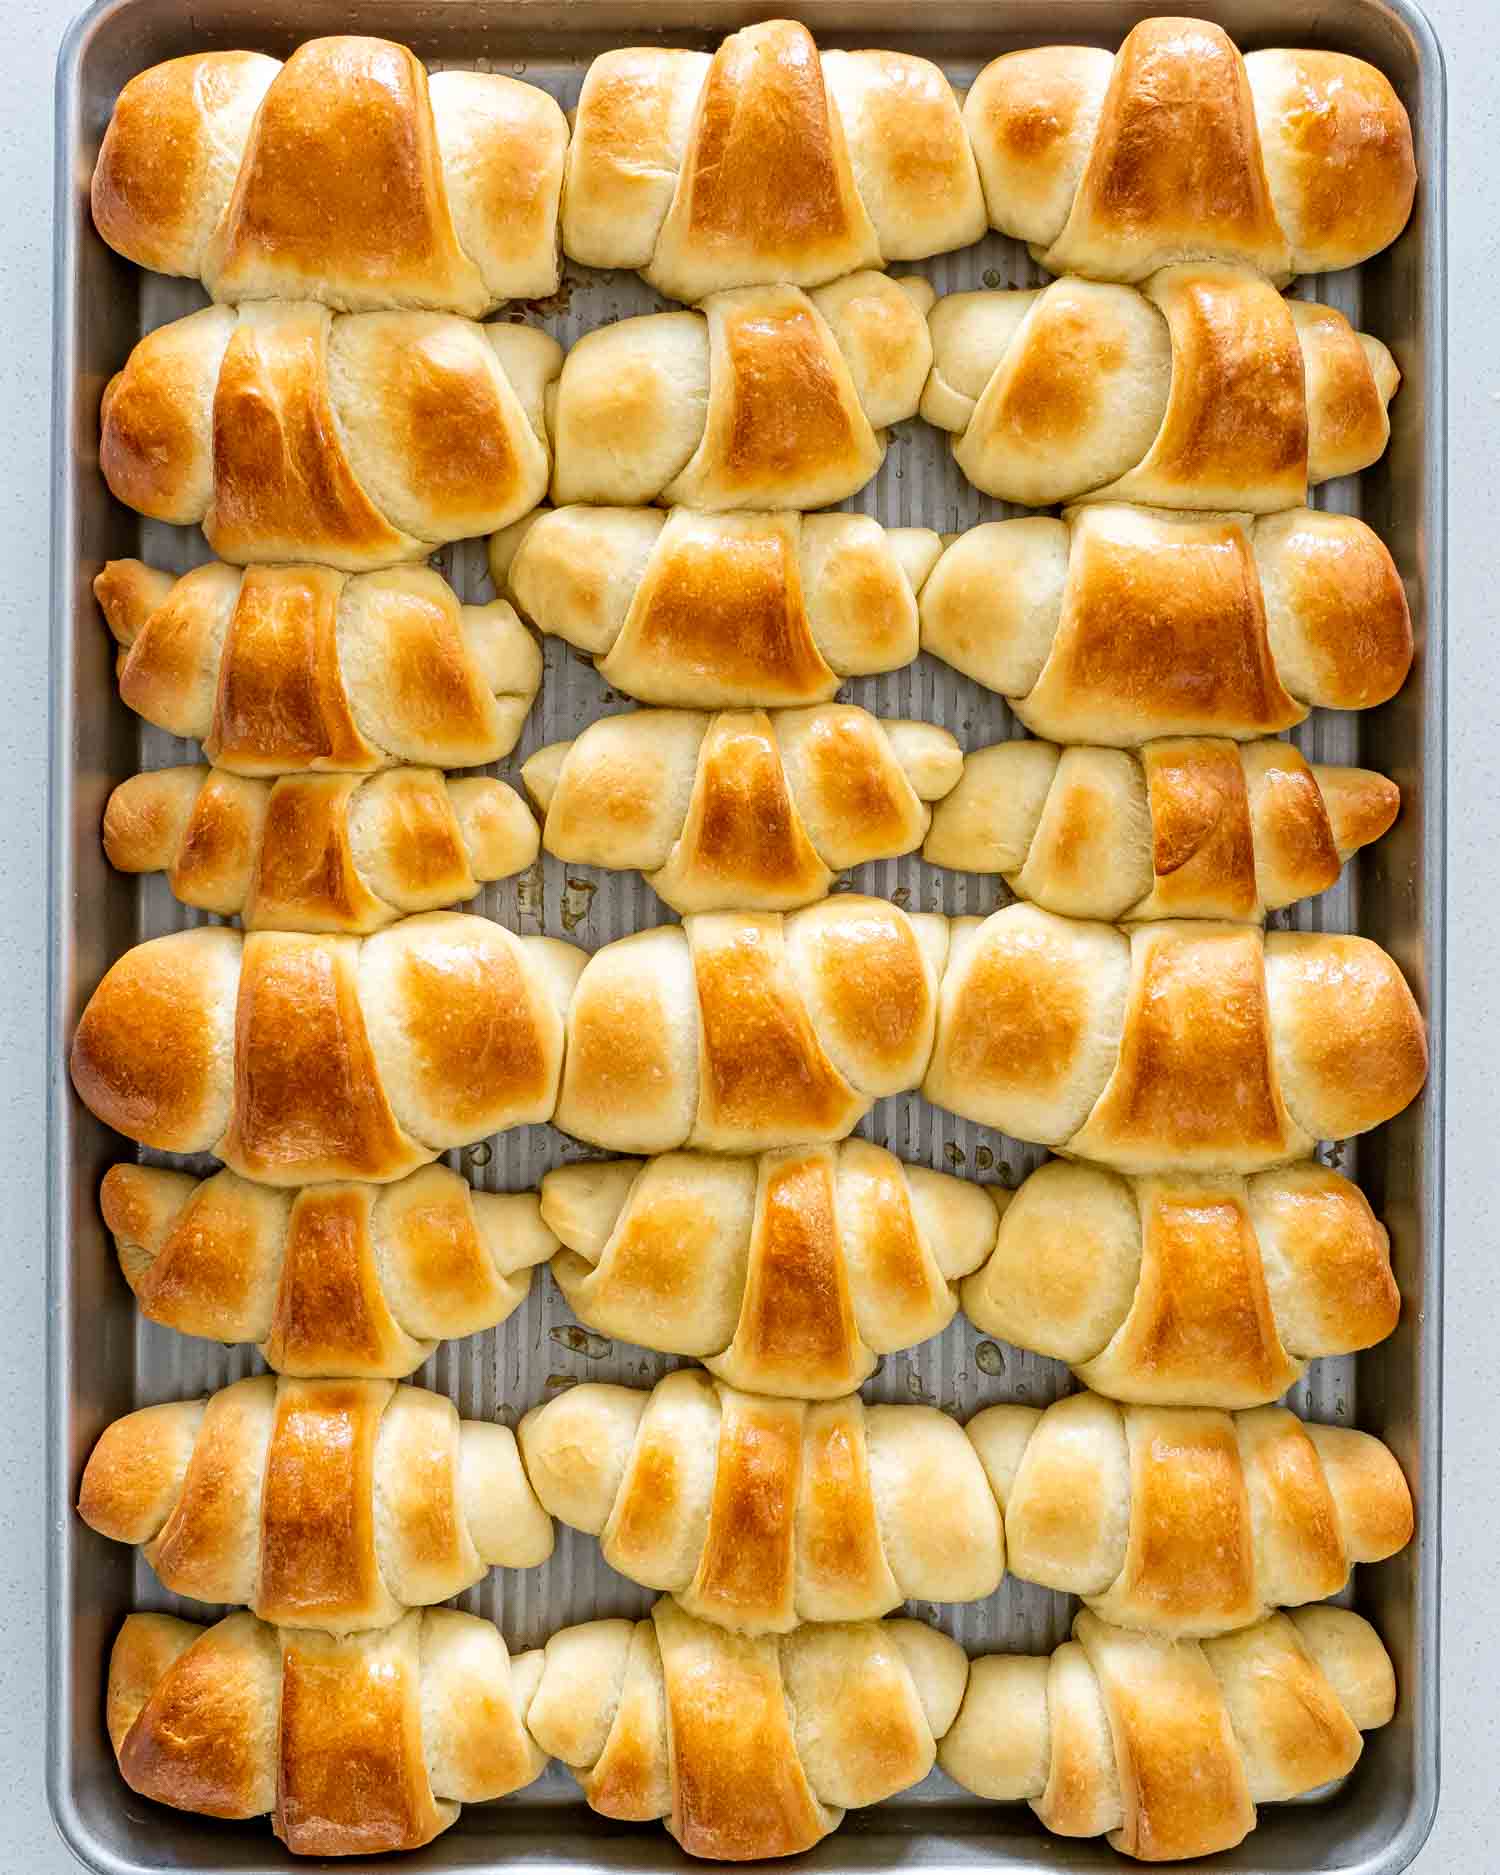 freshly baked crescent rolls on a baking sheet.